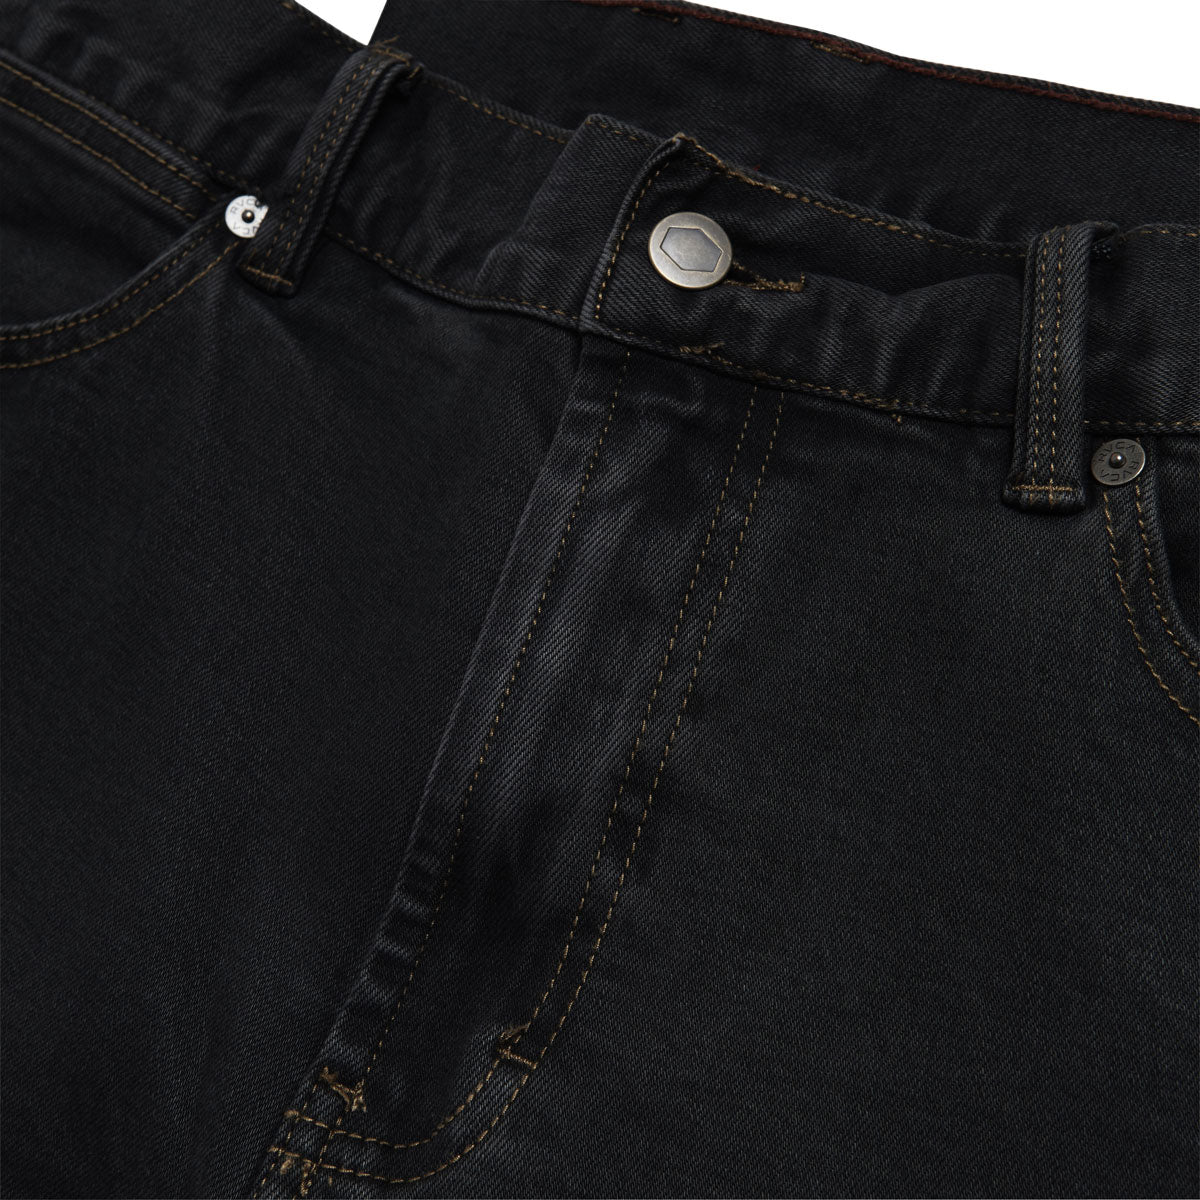 RVCA Weekend Anp Denim Jeans - Black Overdye image 5